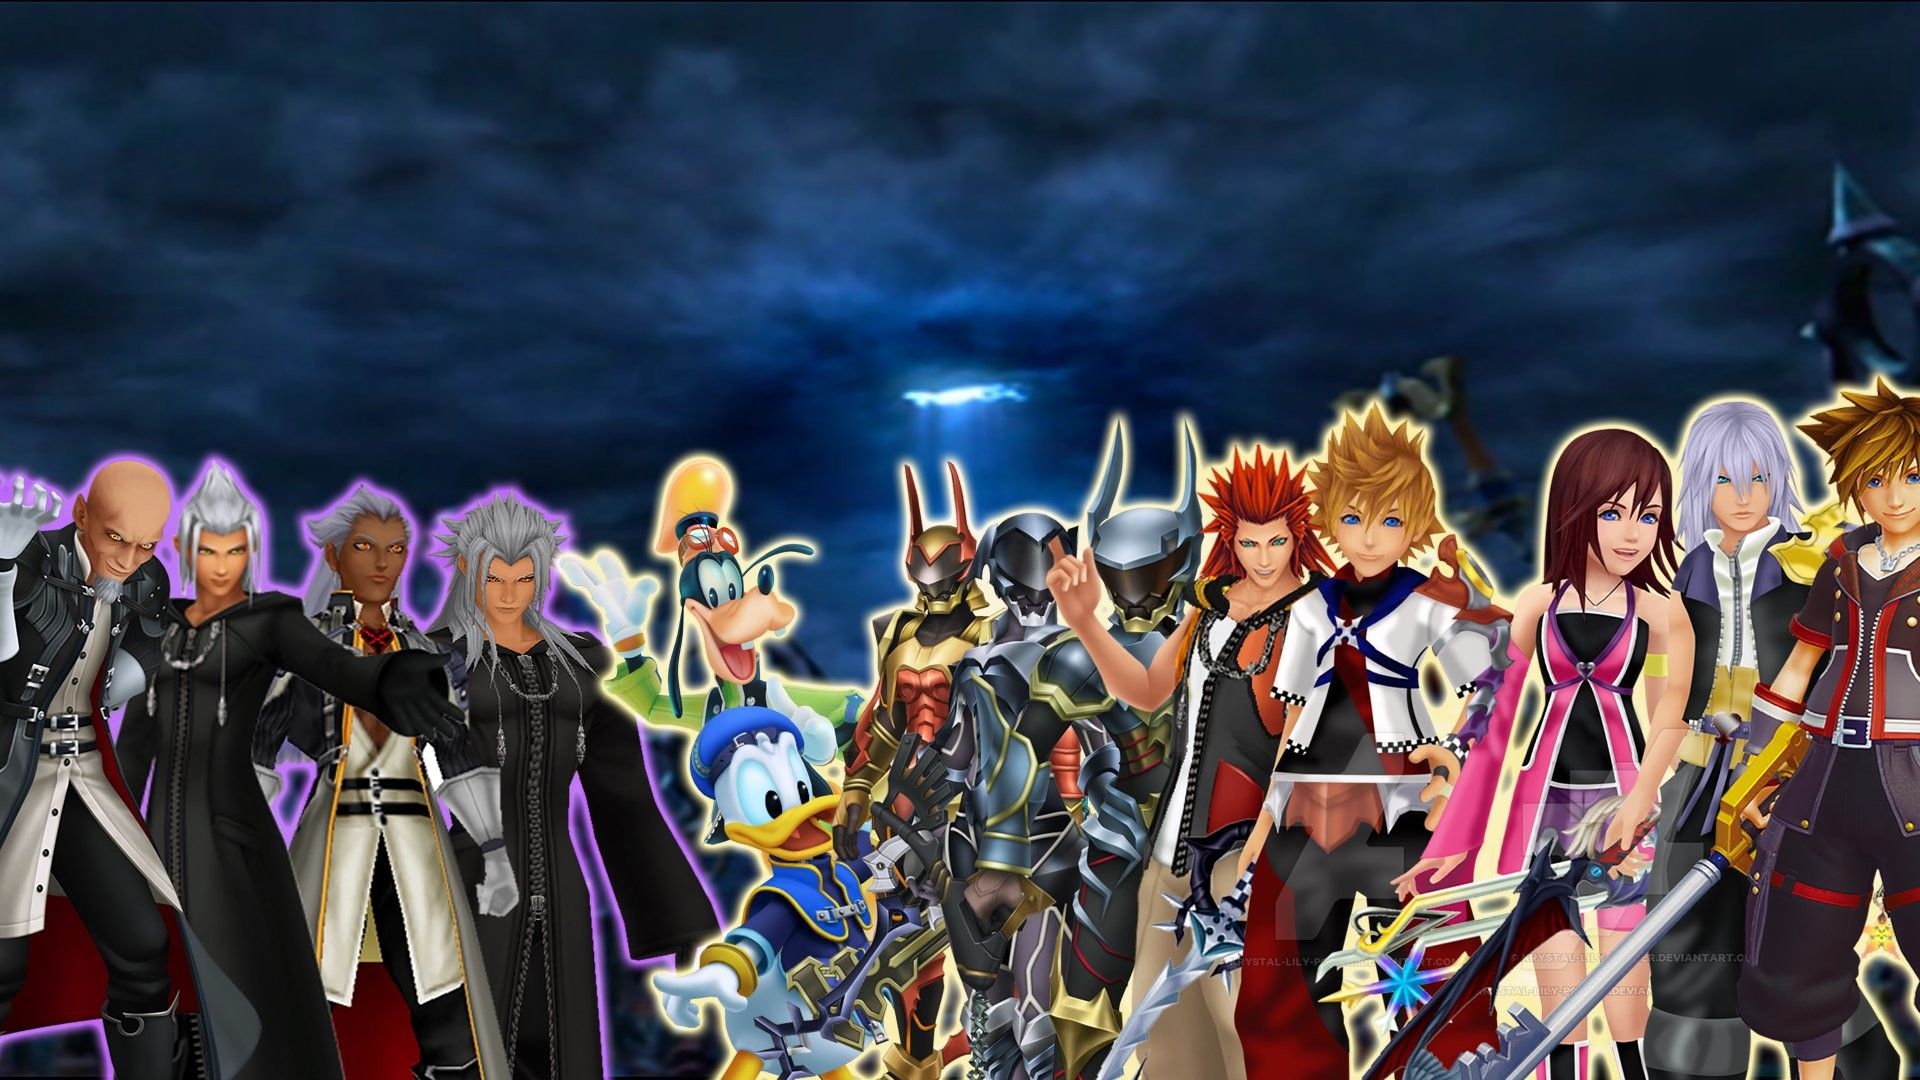 Kingdom Hearts 3 Wallpaper background picture